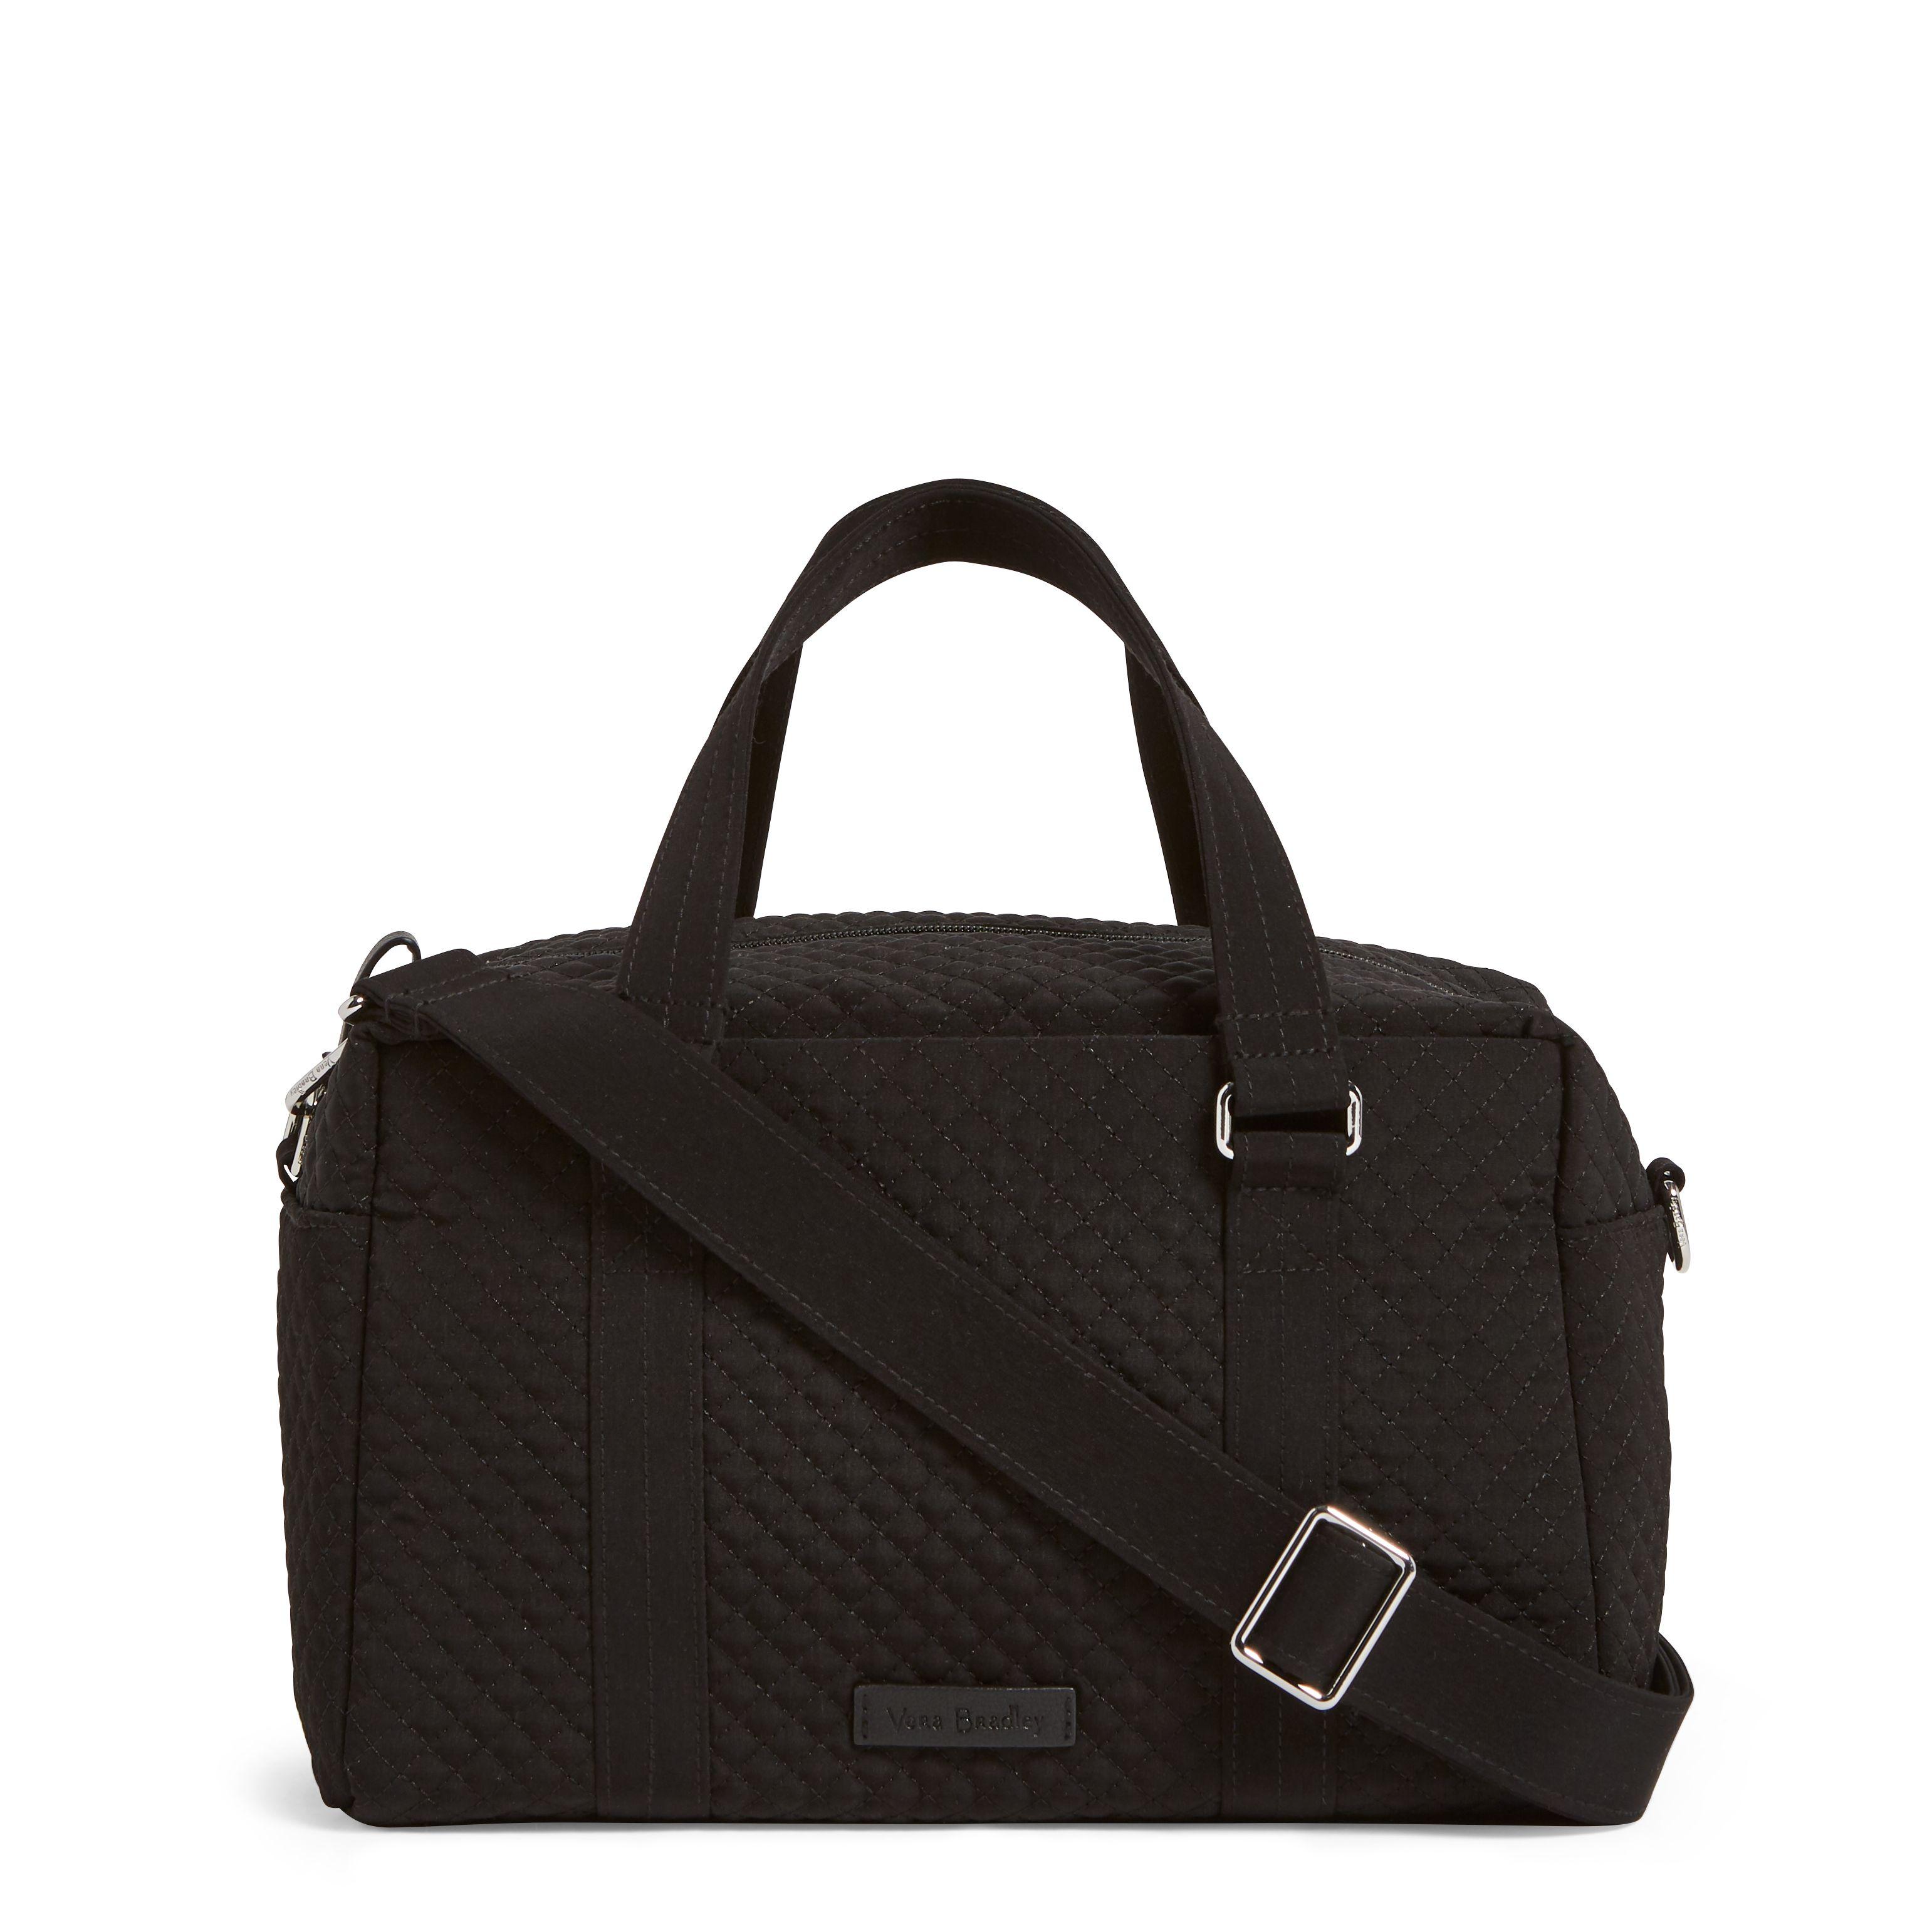 Vera Bradley Synthetic 100 Handbag in Black - Lyst